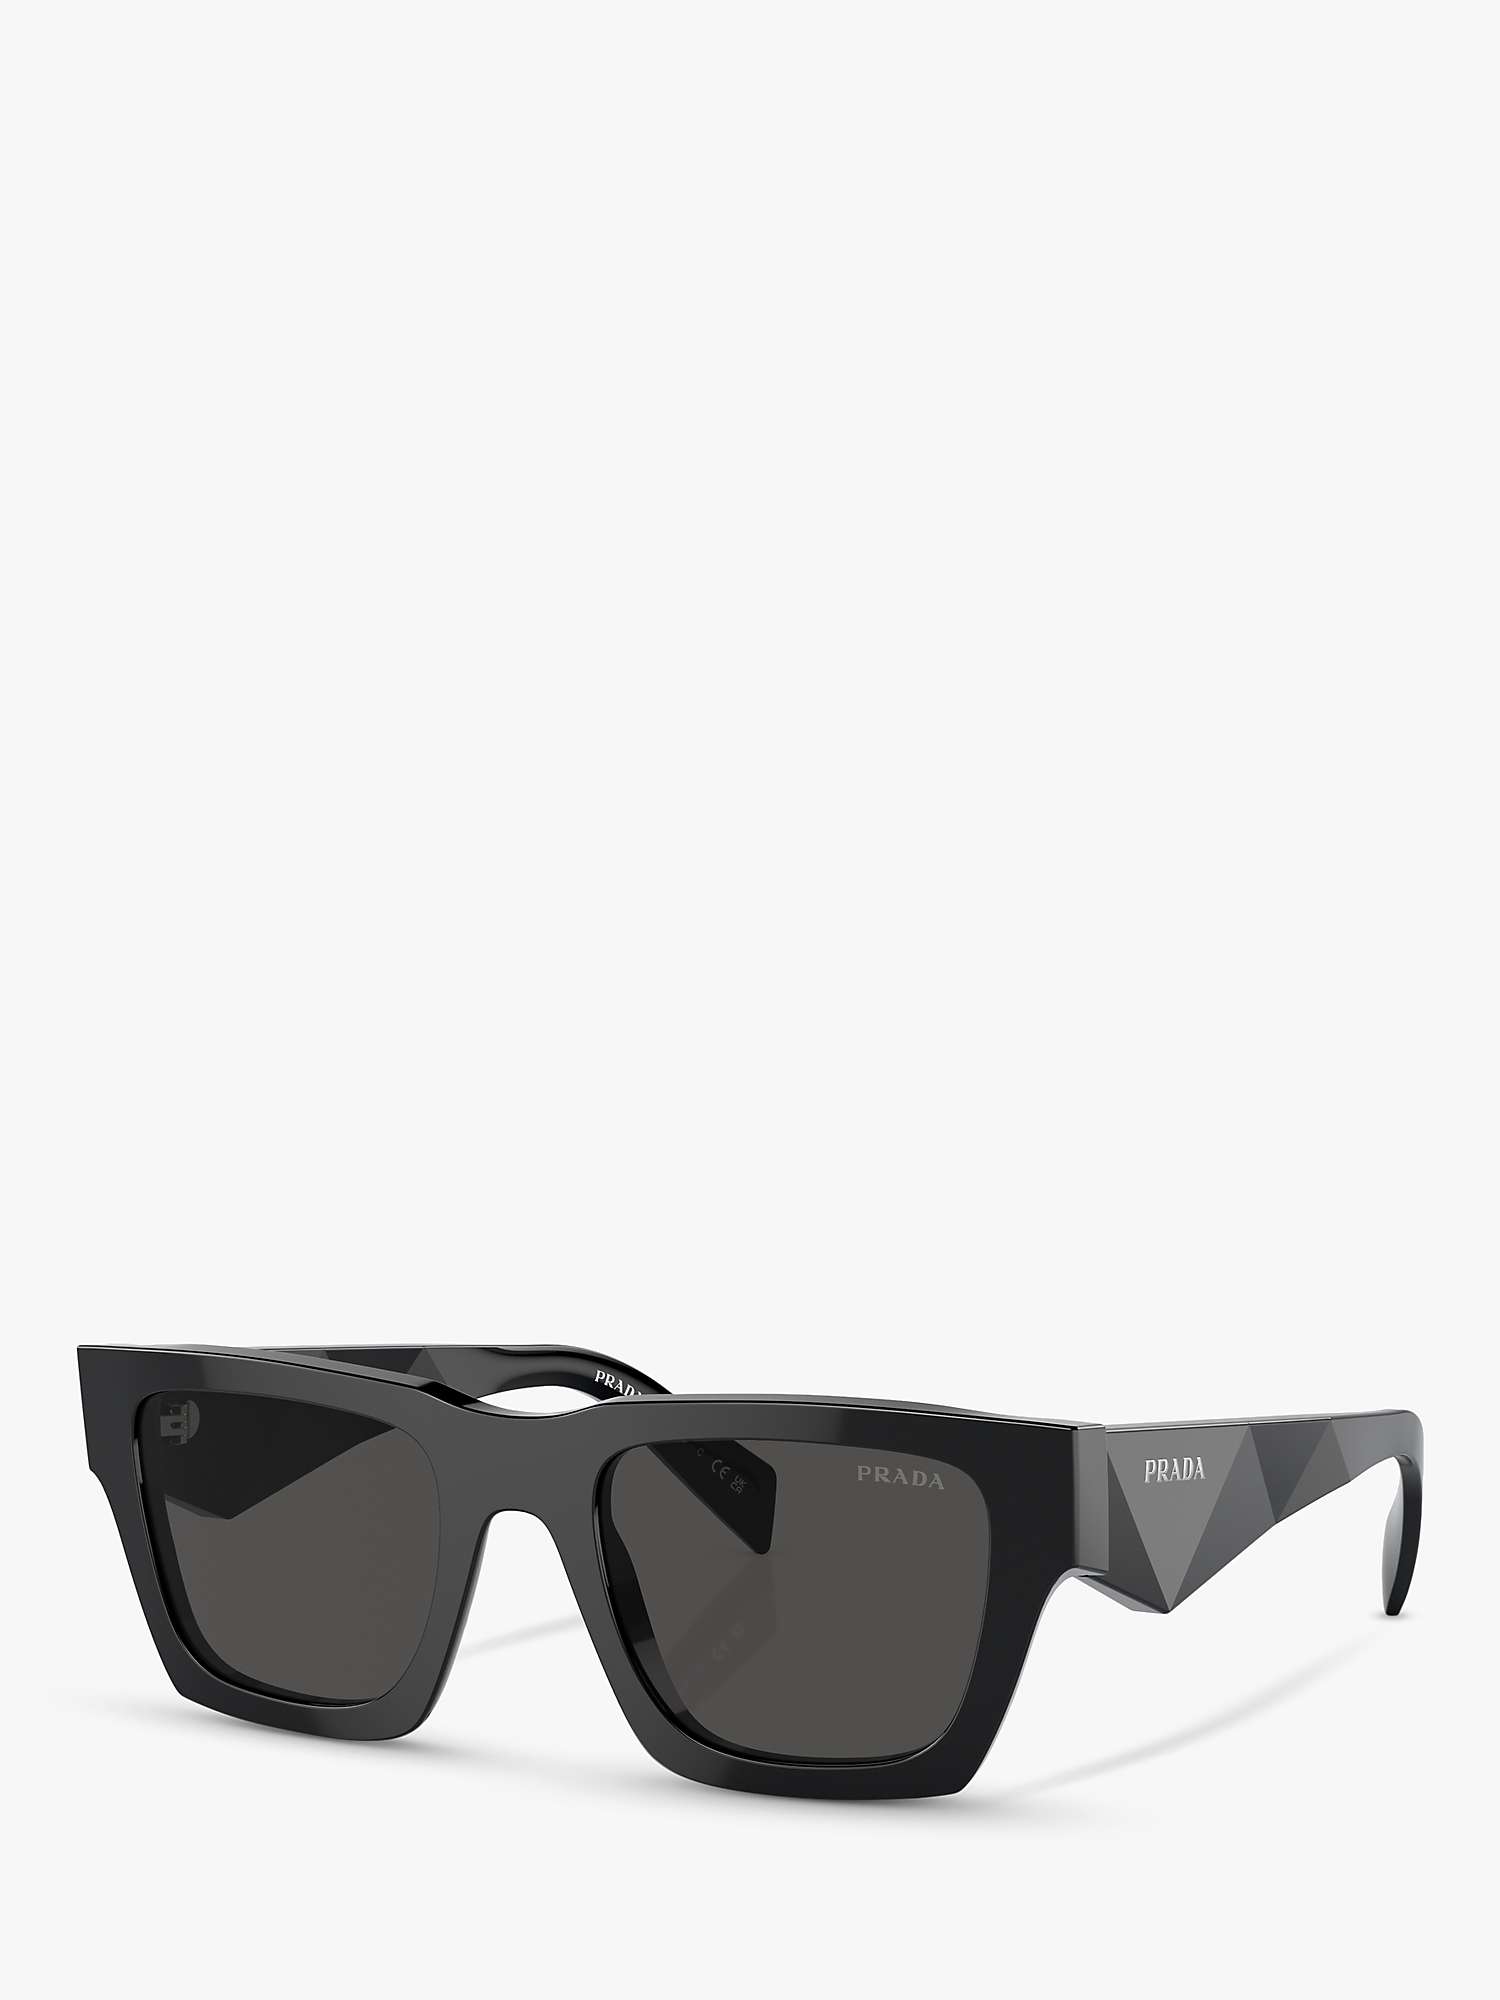 Buy Prada PR A06S Men's D-Frame Sunglasses, Black Online at johnlewis.com